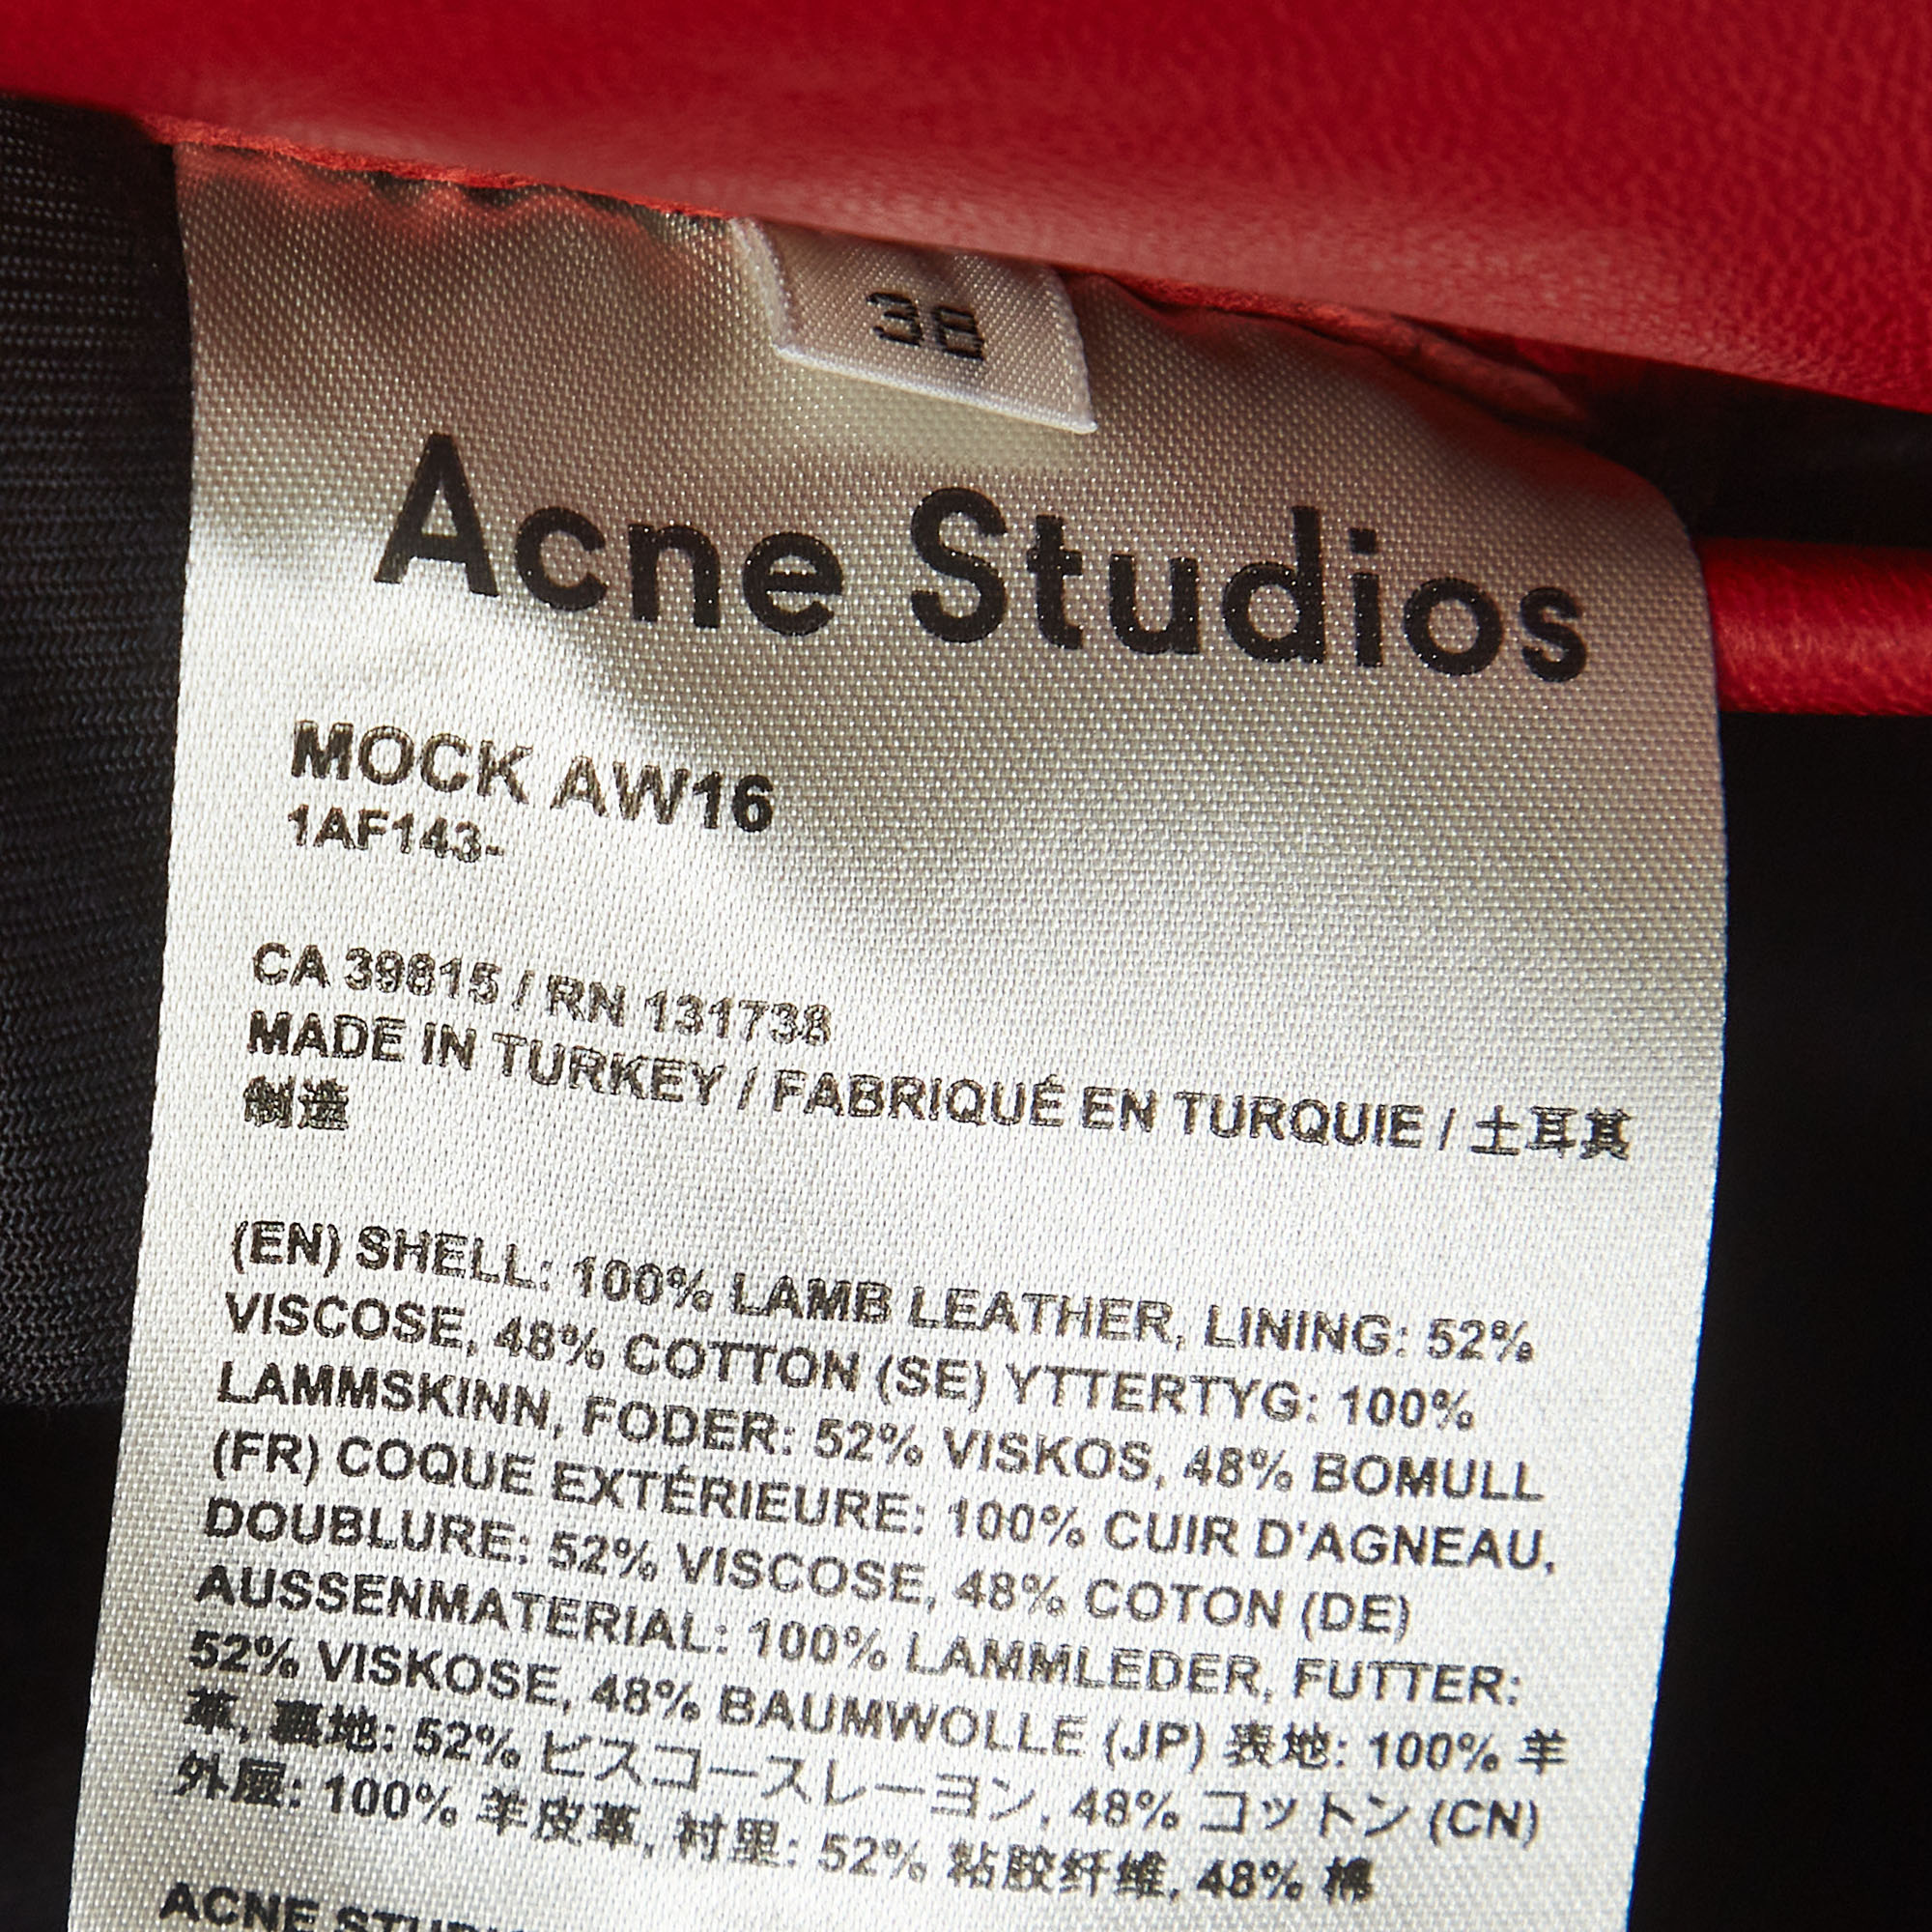 Acne Studios Red Leather Biker Jacket M